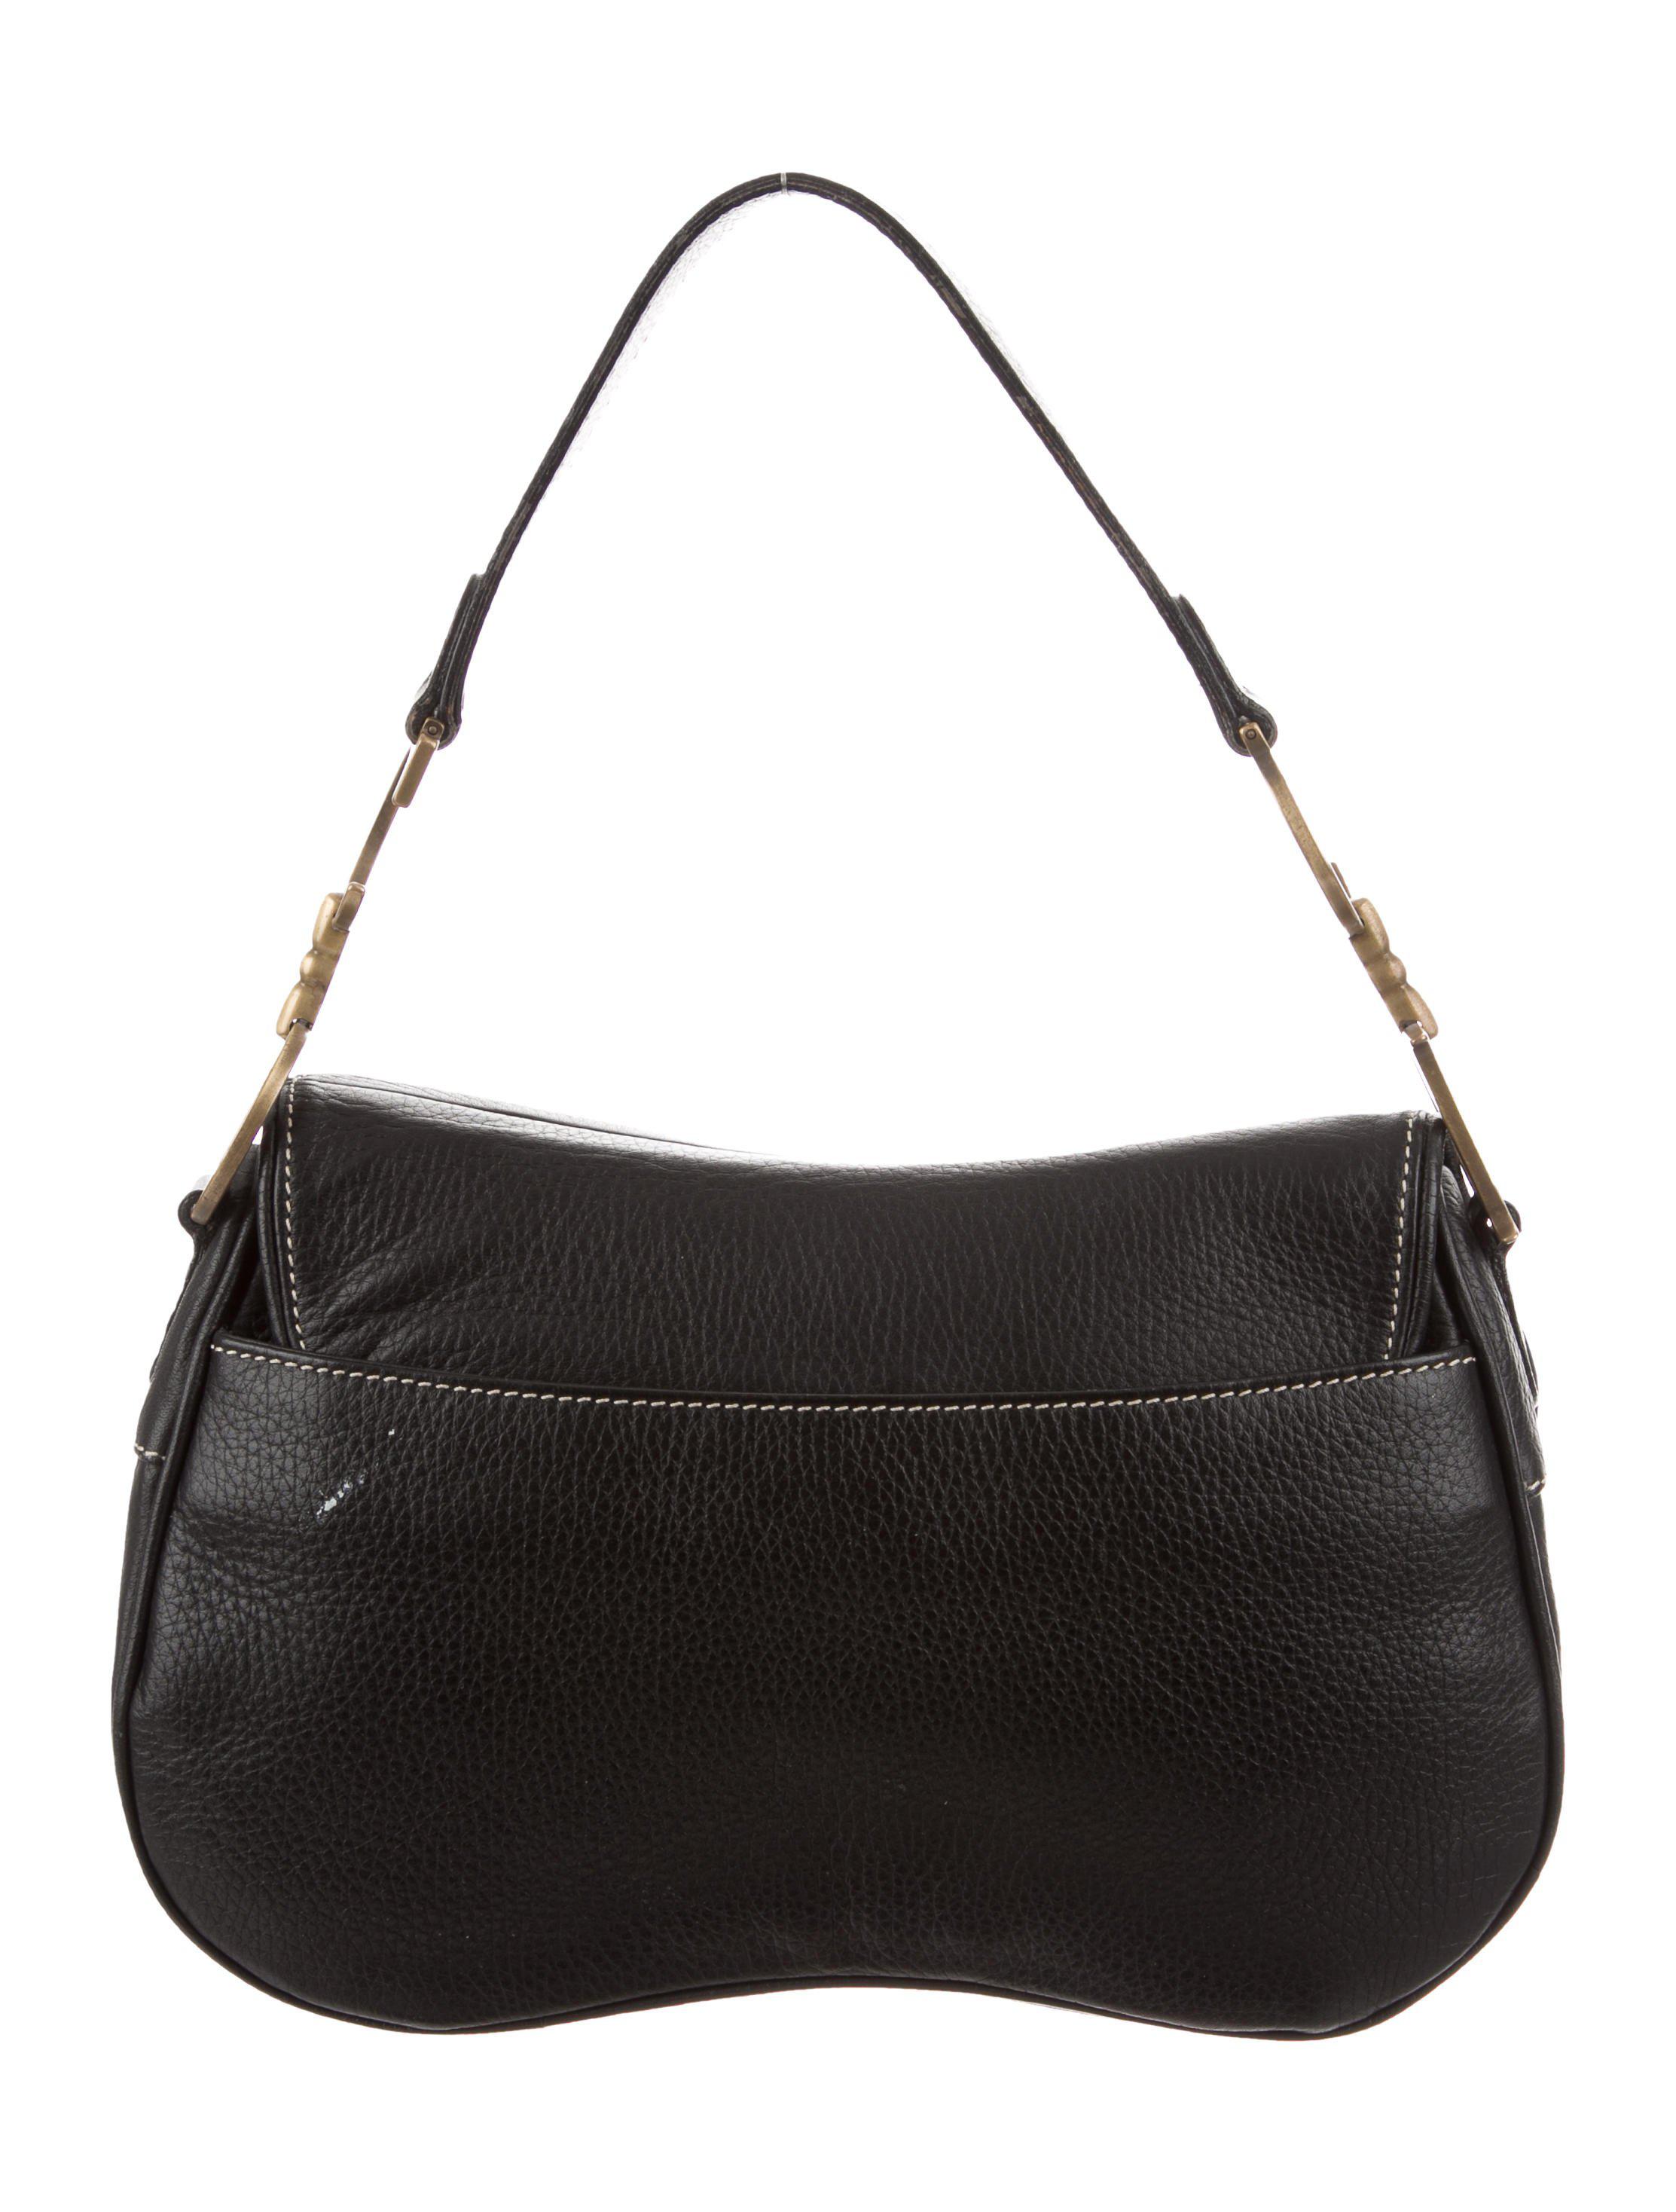 Lyst - Dior Leather Saddle Bag Black in Metallic